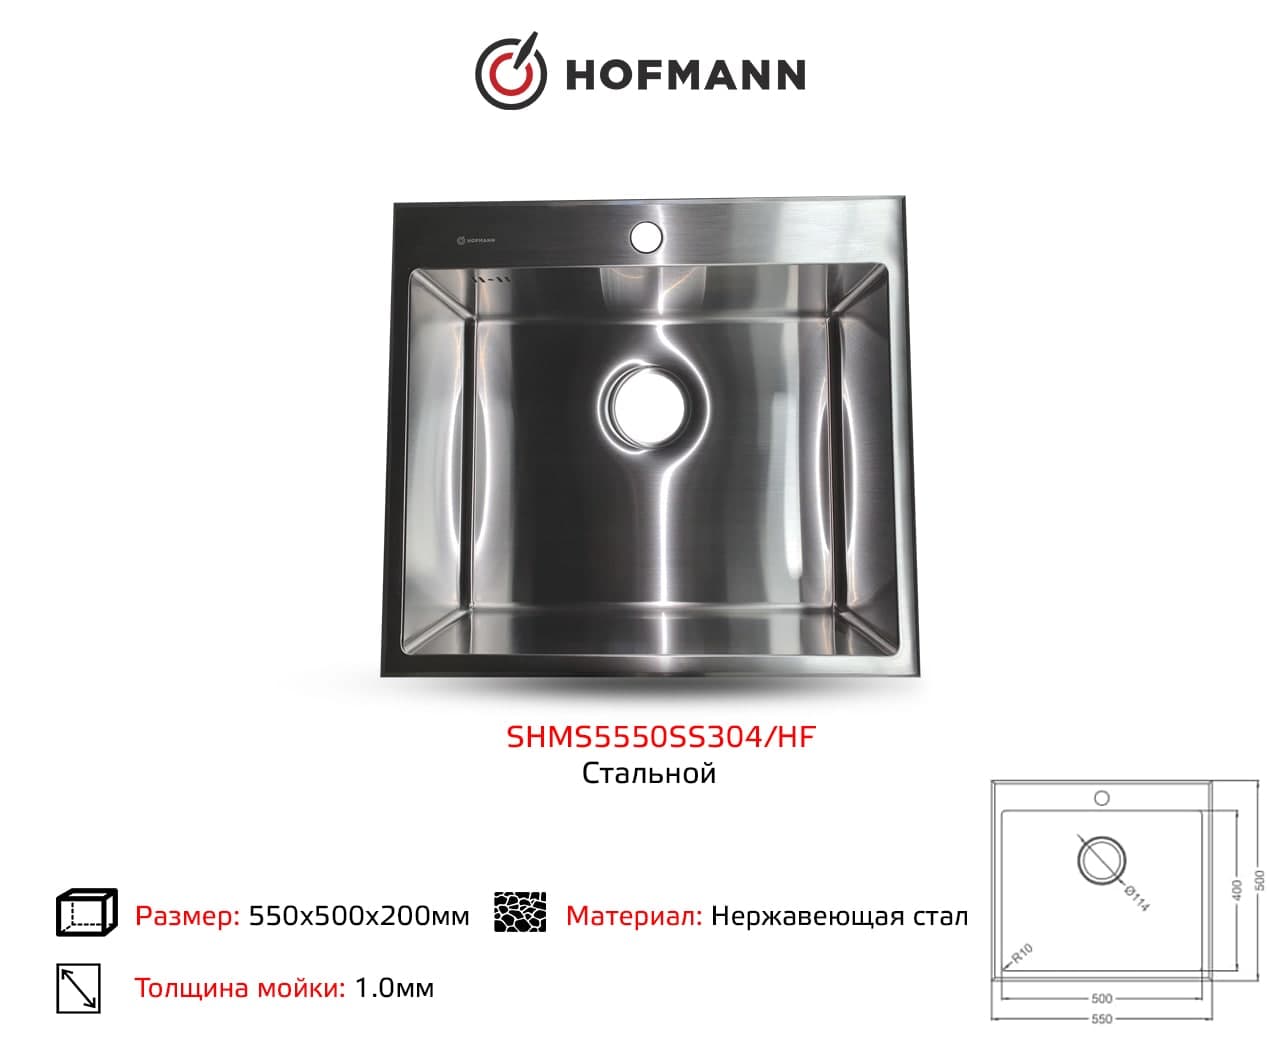 Кухонные мойки Hofmann SHMS5550SS304/HF